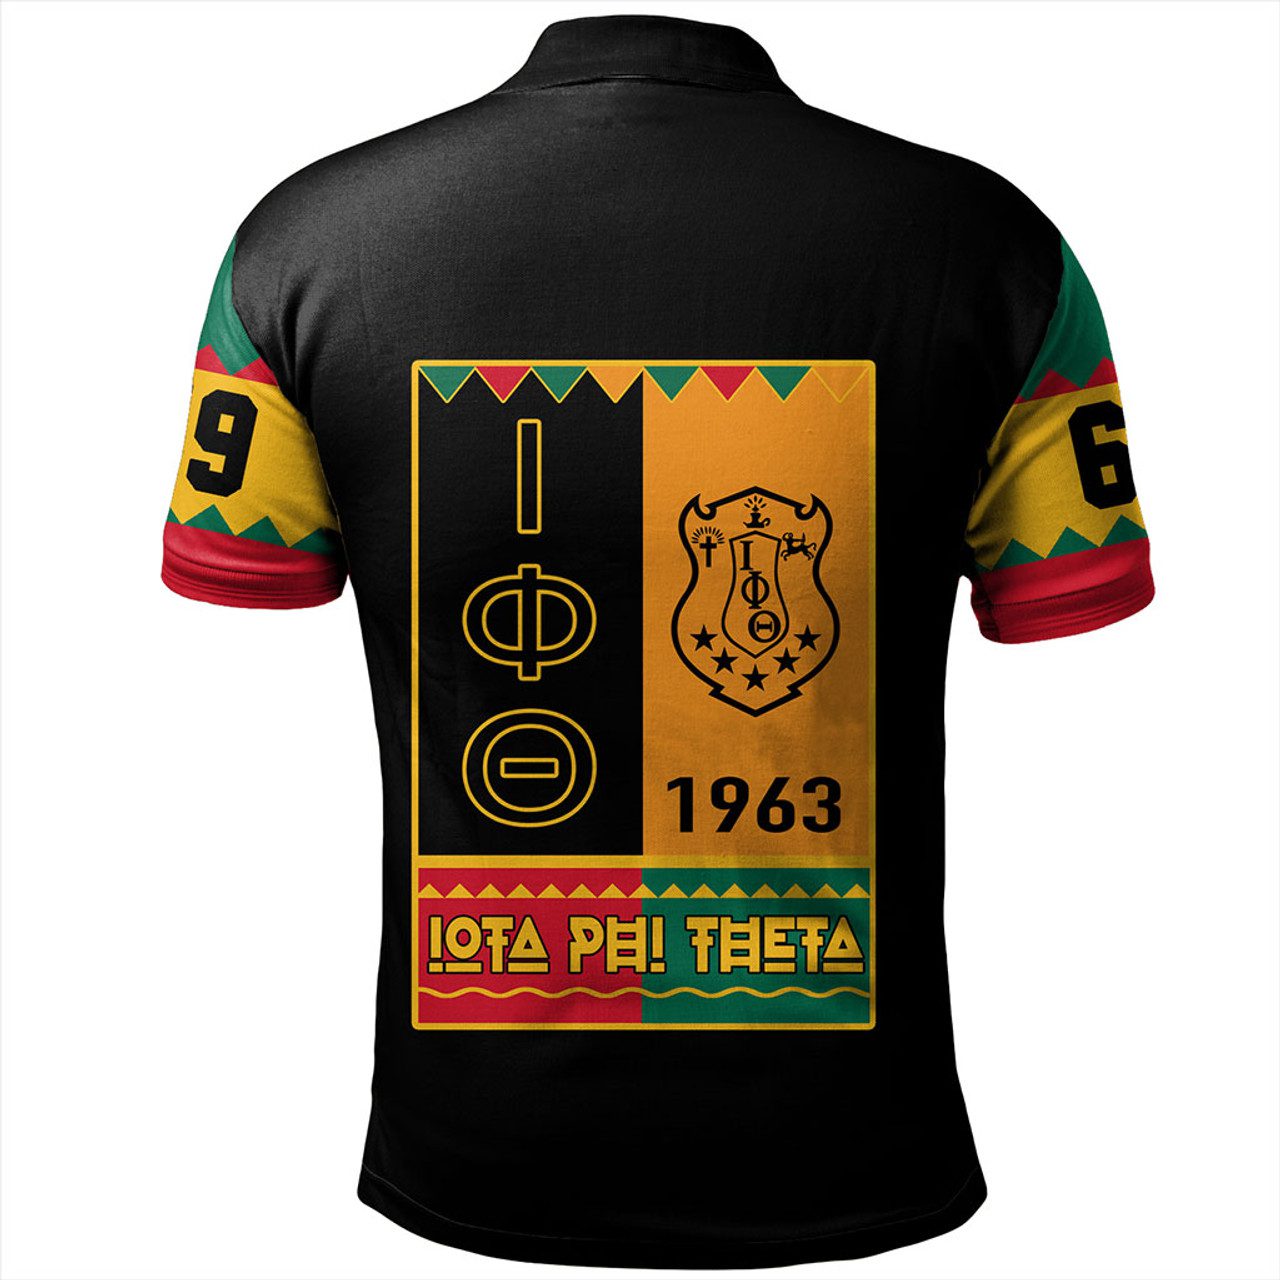 Iota Phi Theta Polo Shirt Black History Month